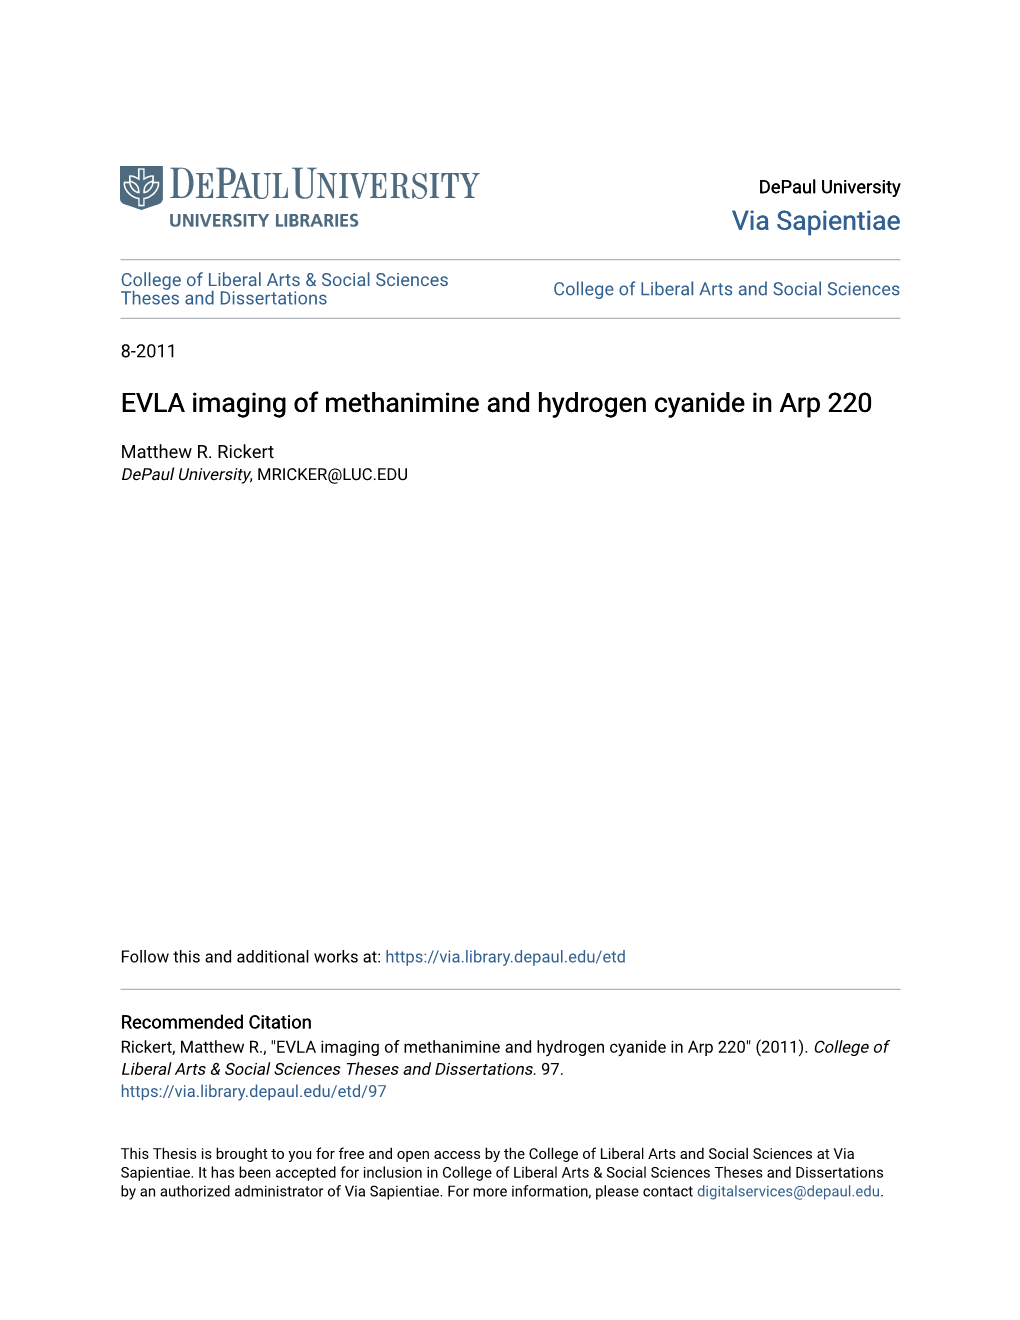 EVLA Imaging of Methanimine and Hydrogen Cyanide in Arp 220